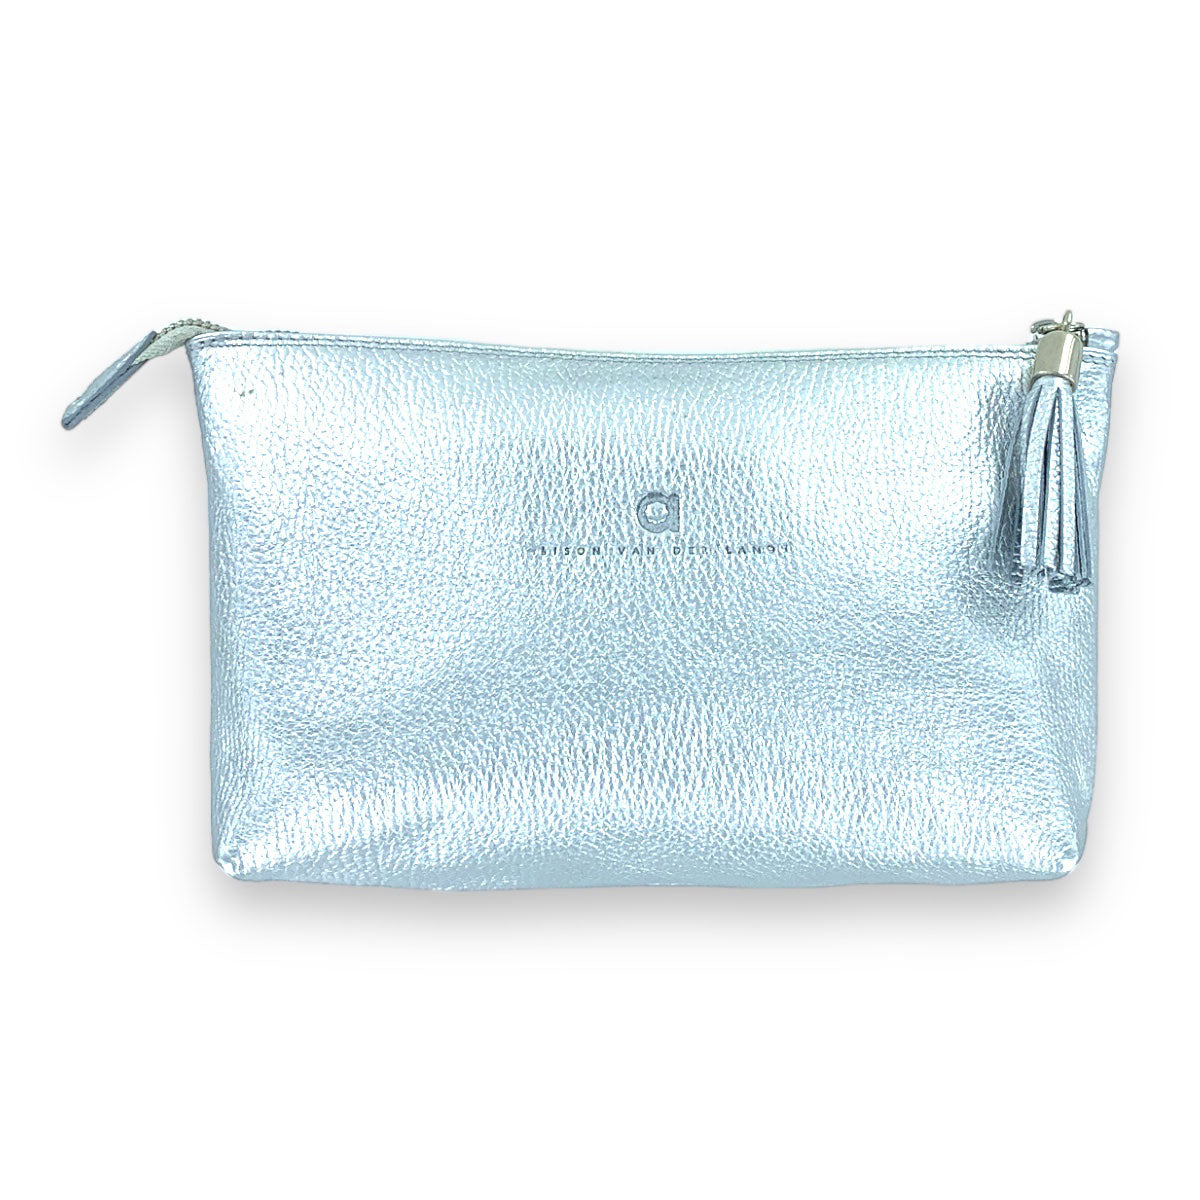 Metallic Silver Clutch Bag